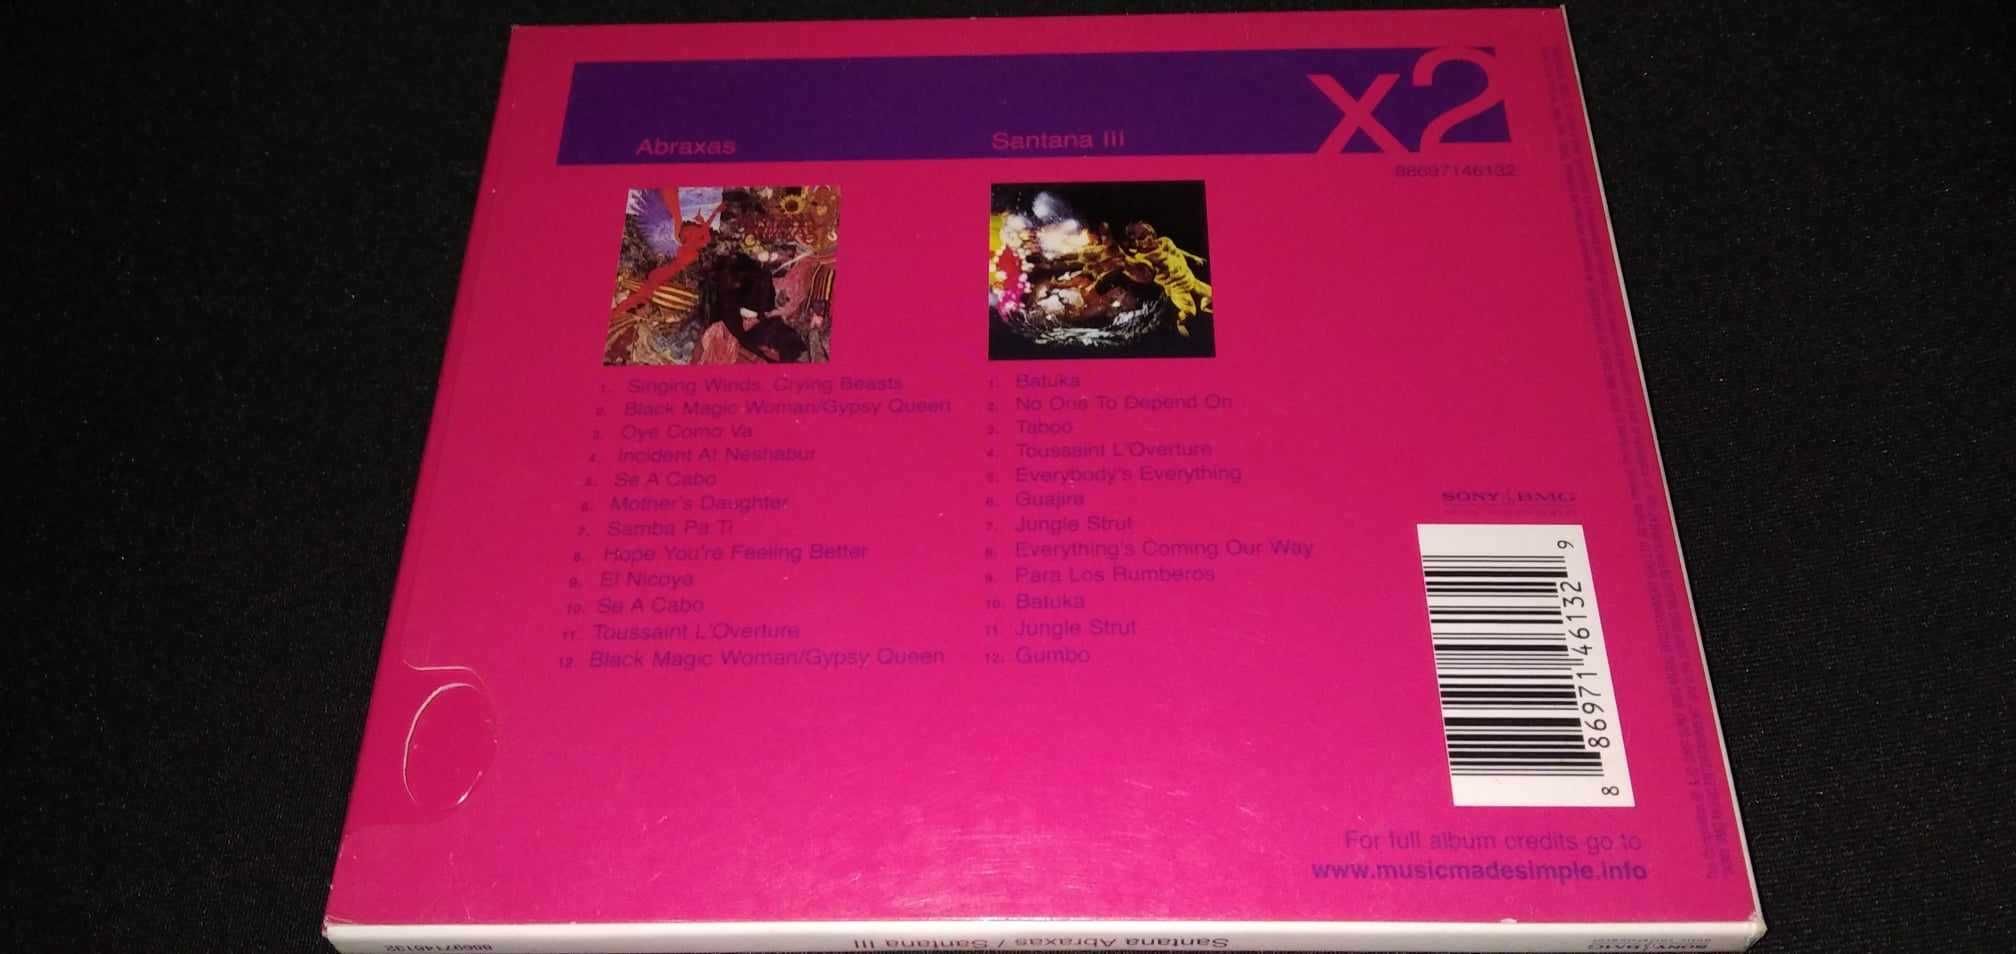 Santana – Abraxas / Santana III (2CD excelente)